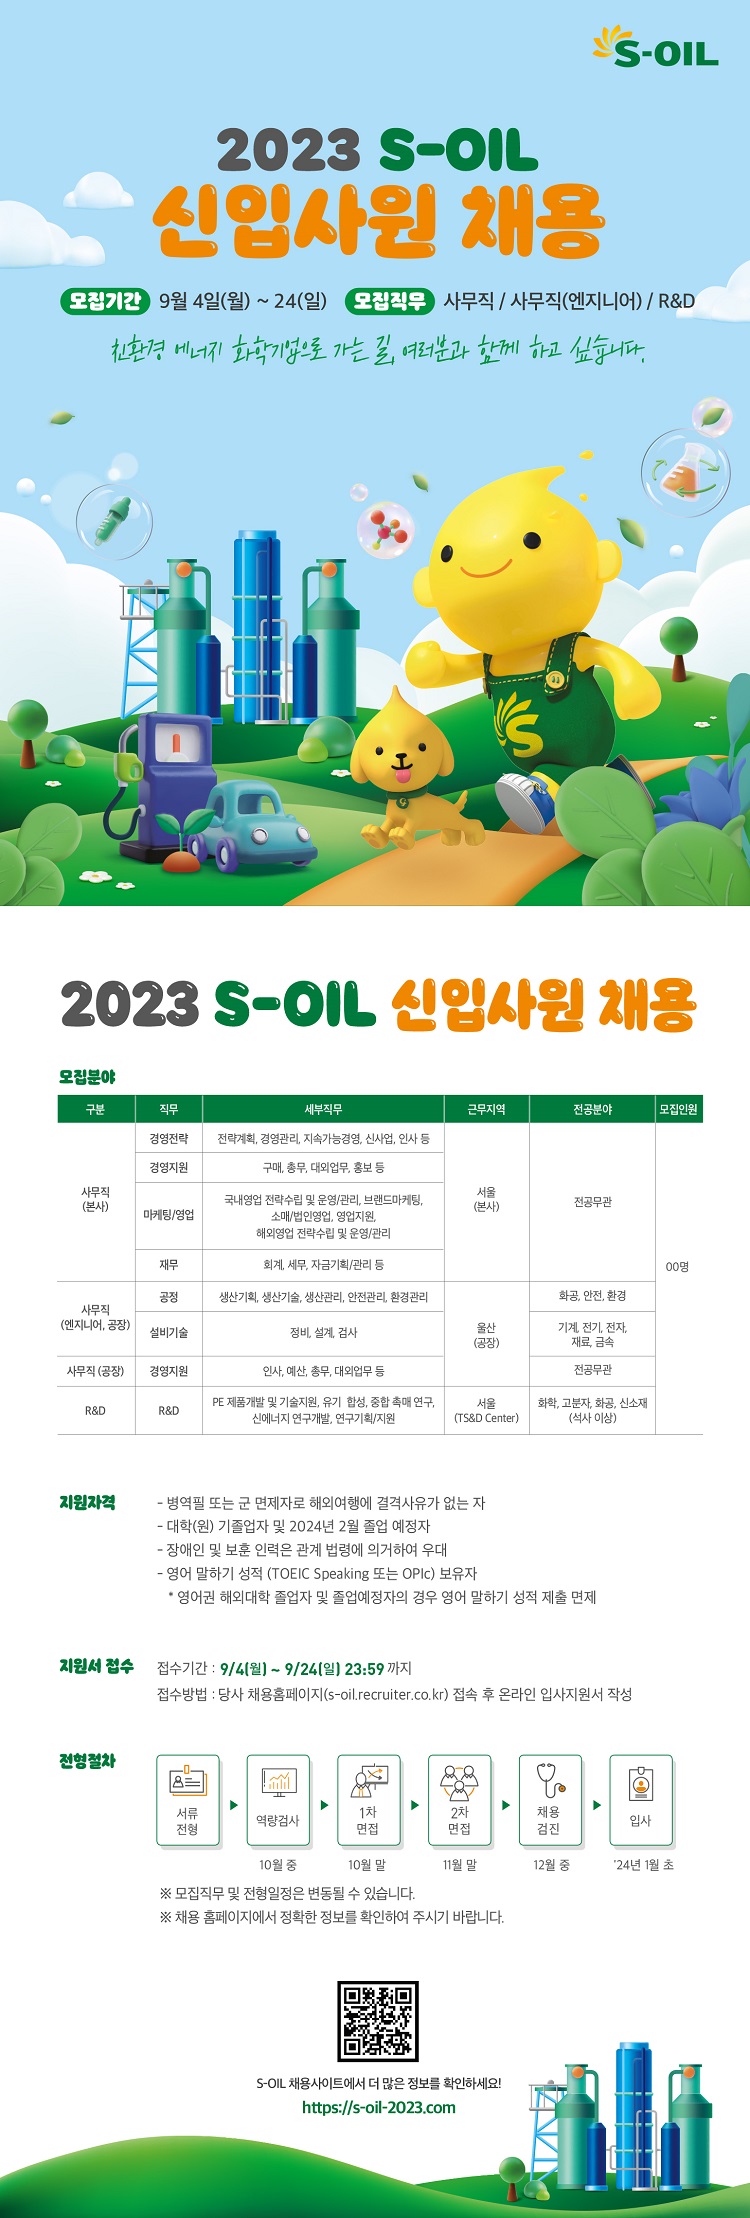 2023 S-OIL 신입사원 채용